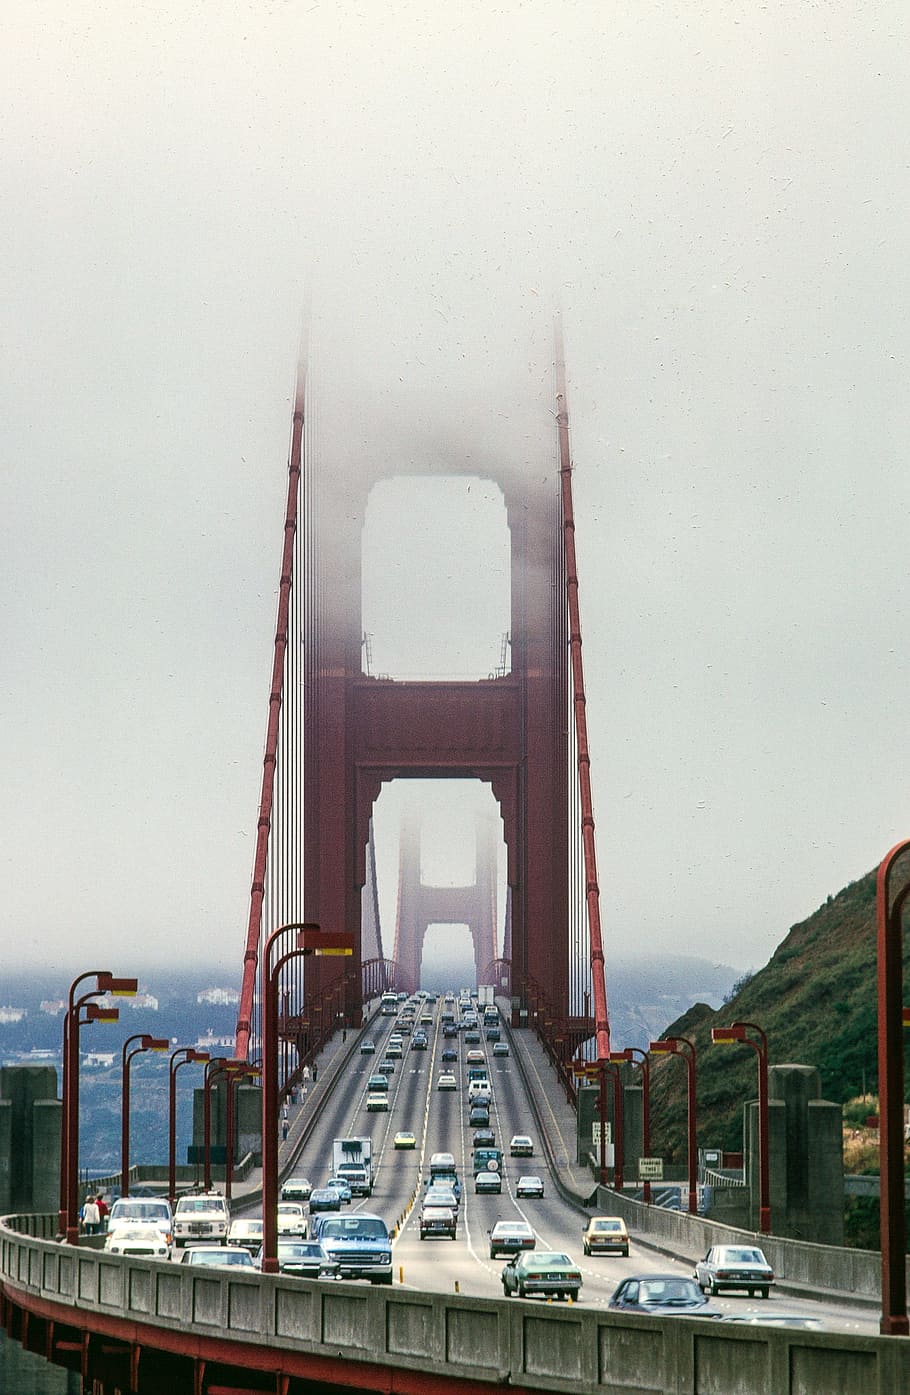 Traffic along the Golden Gate Bridge, San Francisco, California